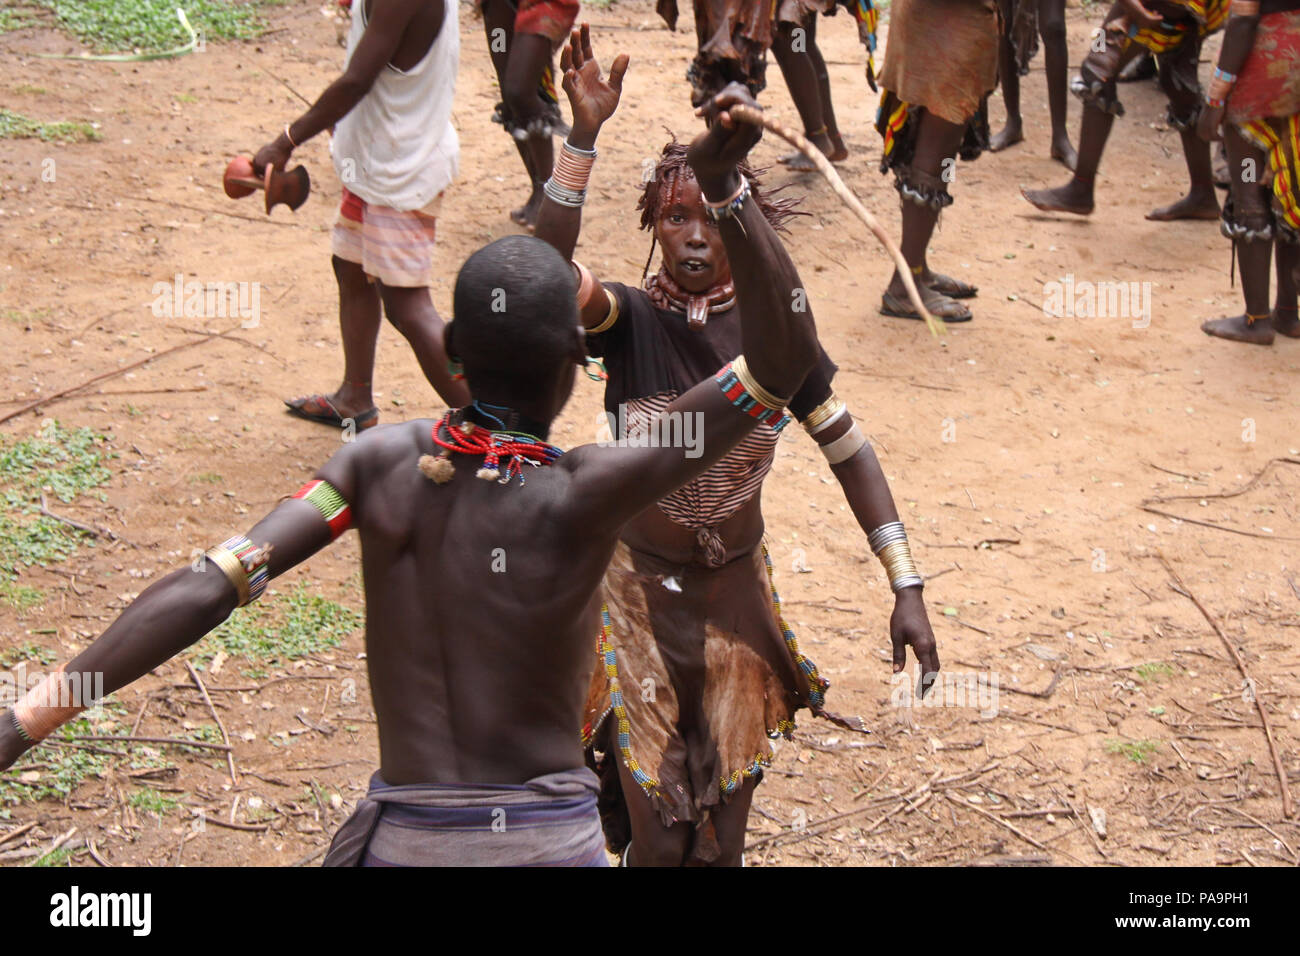 https://c8.alamy.com/comp/PA9PH1/hamer-man-whipping-a-woman-during-bull-jumping-ceremony-ukuli-ritual-by-hamer-hamar-tribe-ethiopia-PA9PH1.jpg